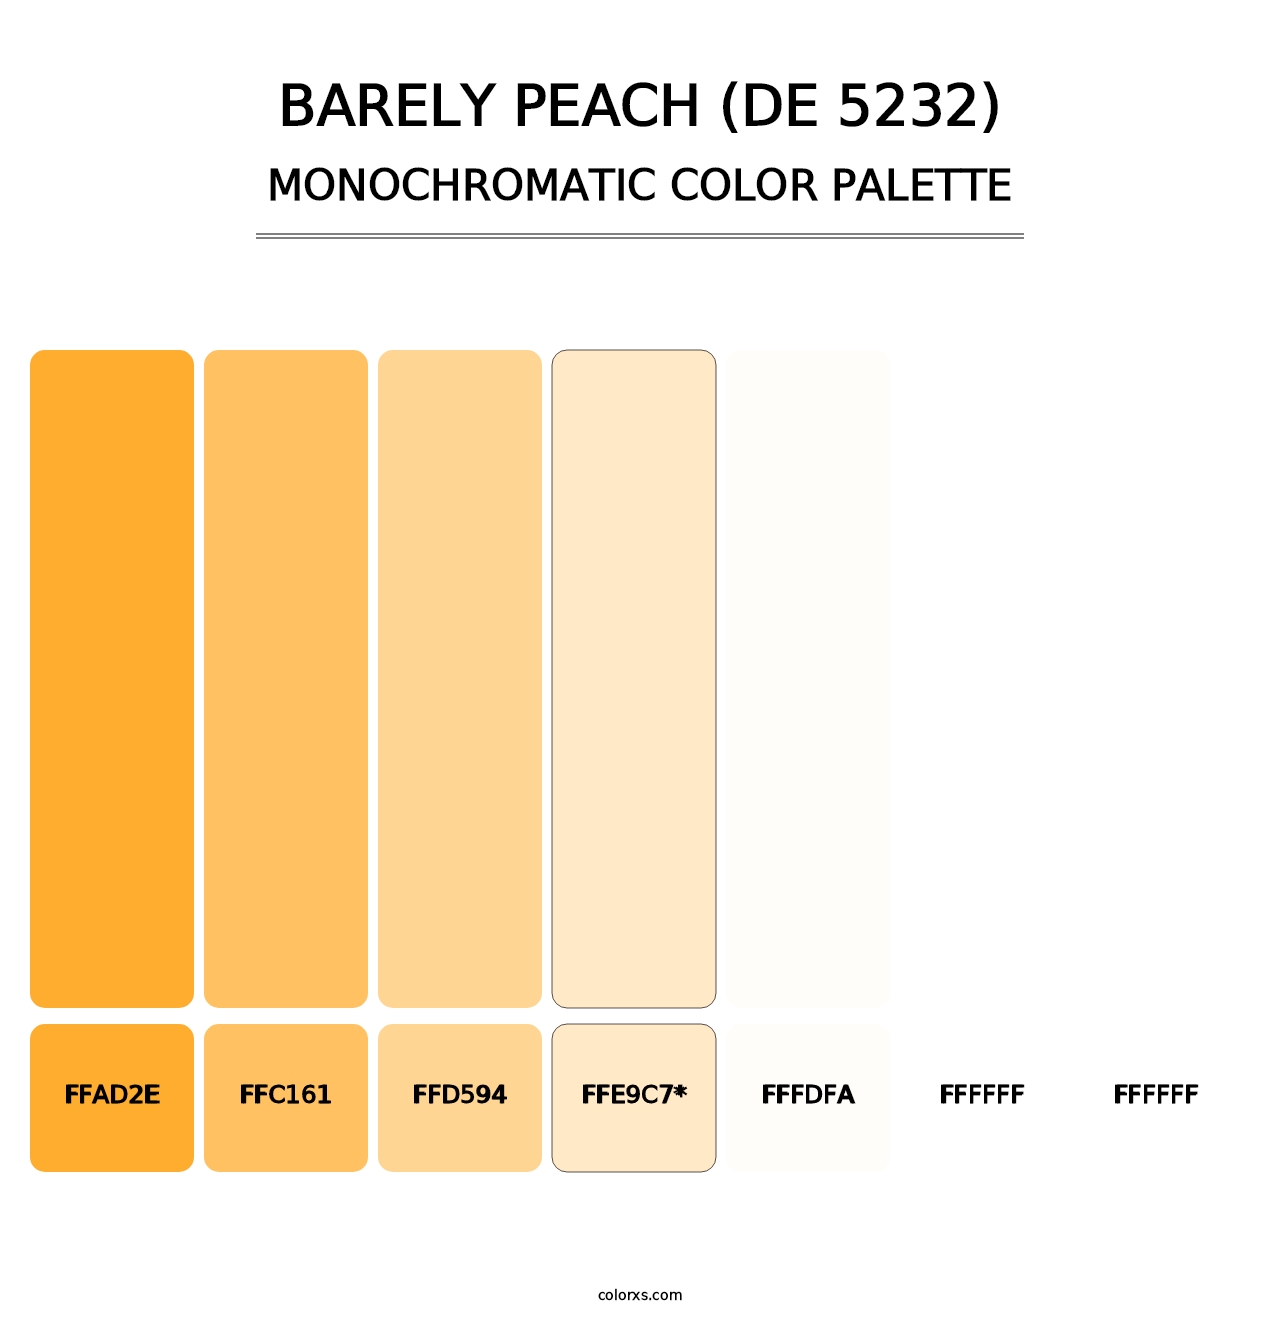 Barely Peach (DE 5232) - Monochromatic Color Palette